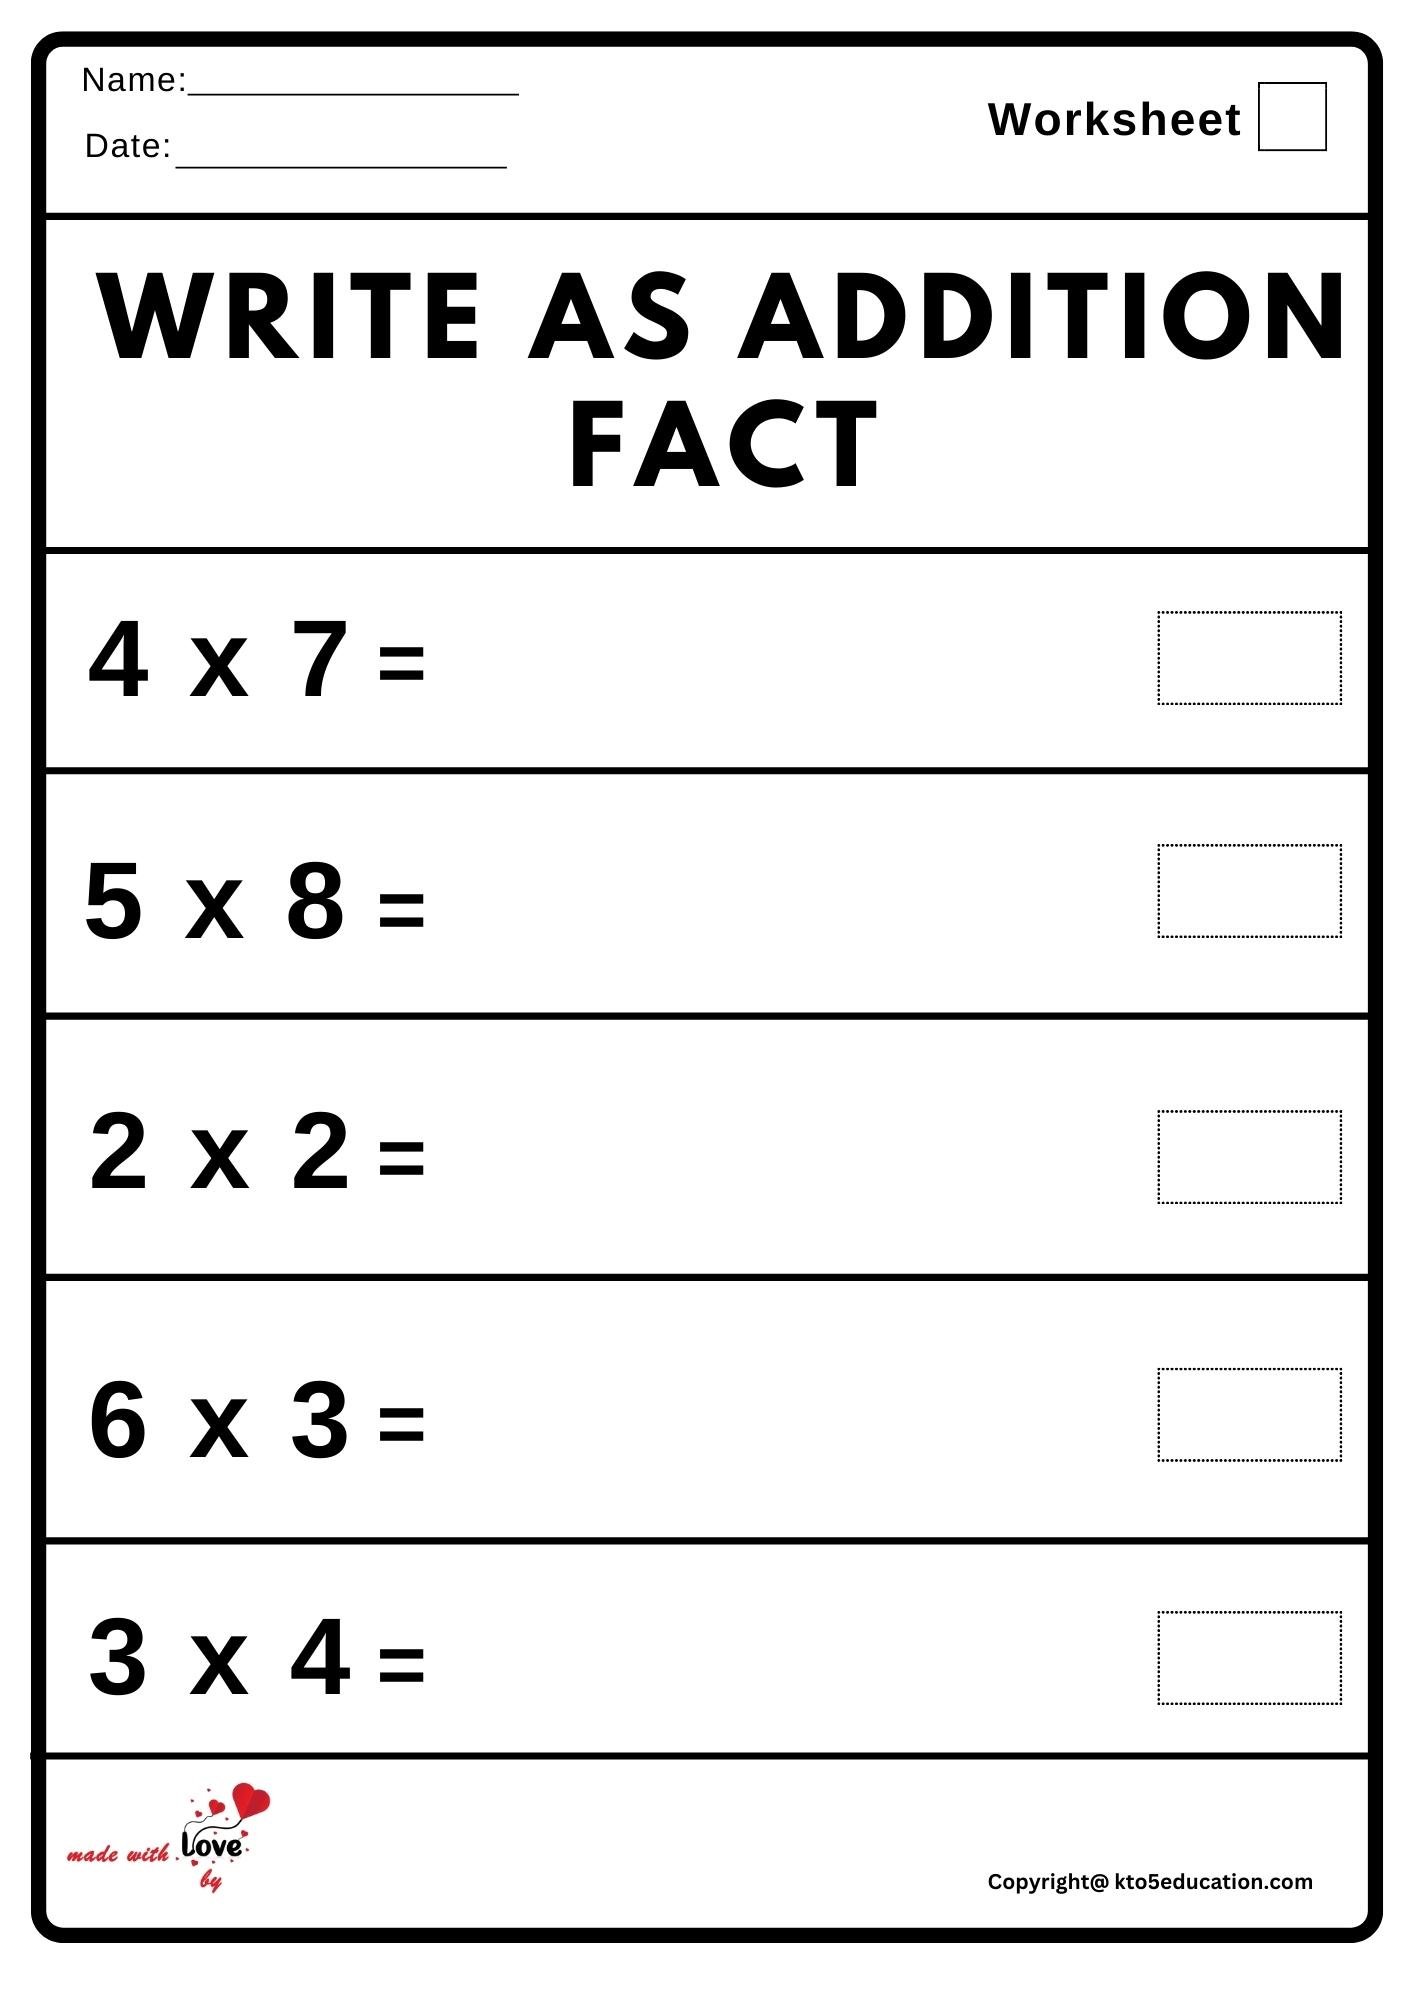 Write As Addition Fact Worksheet 2